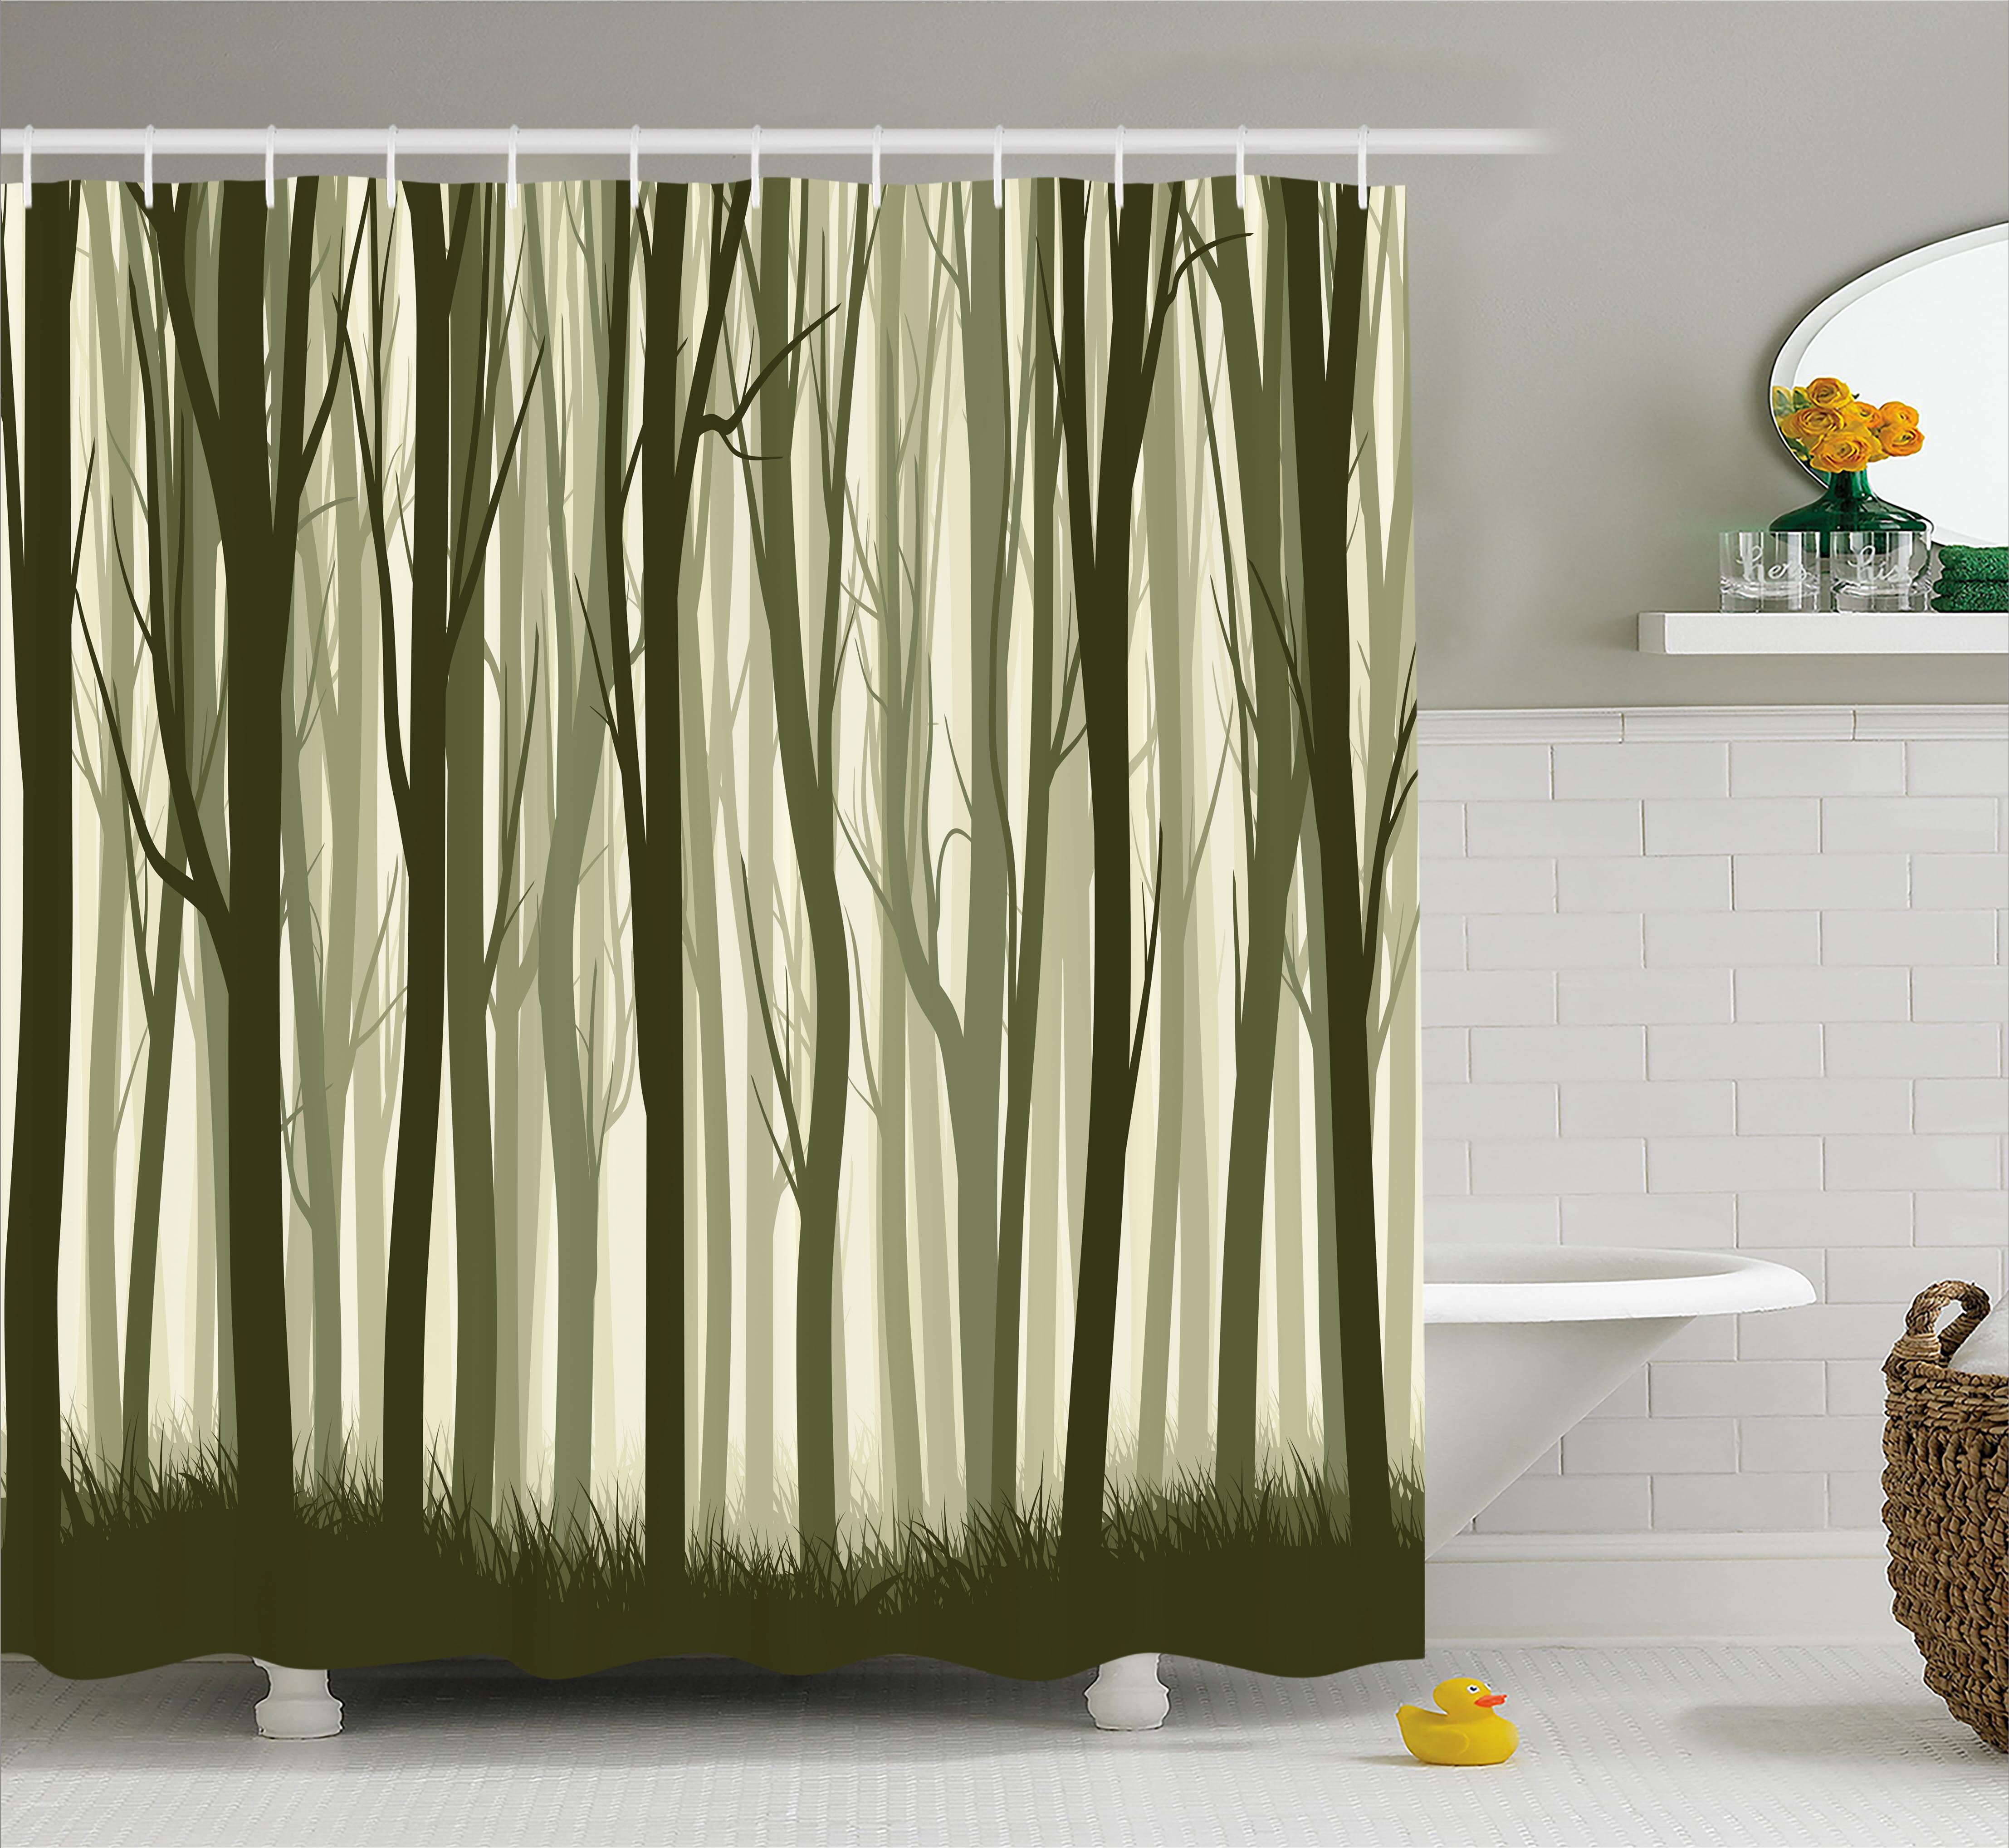 Tree Forest in Sunset Big Sky Nature Fabric Shower Curtain Digital Art Bathroom 